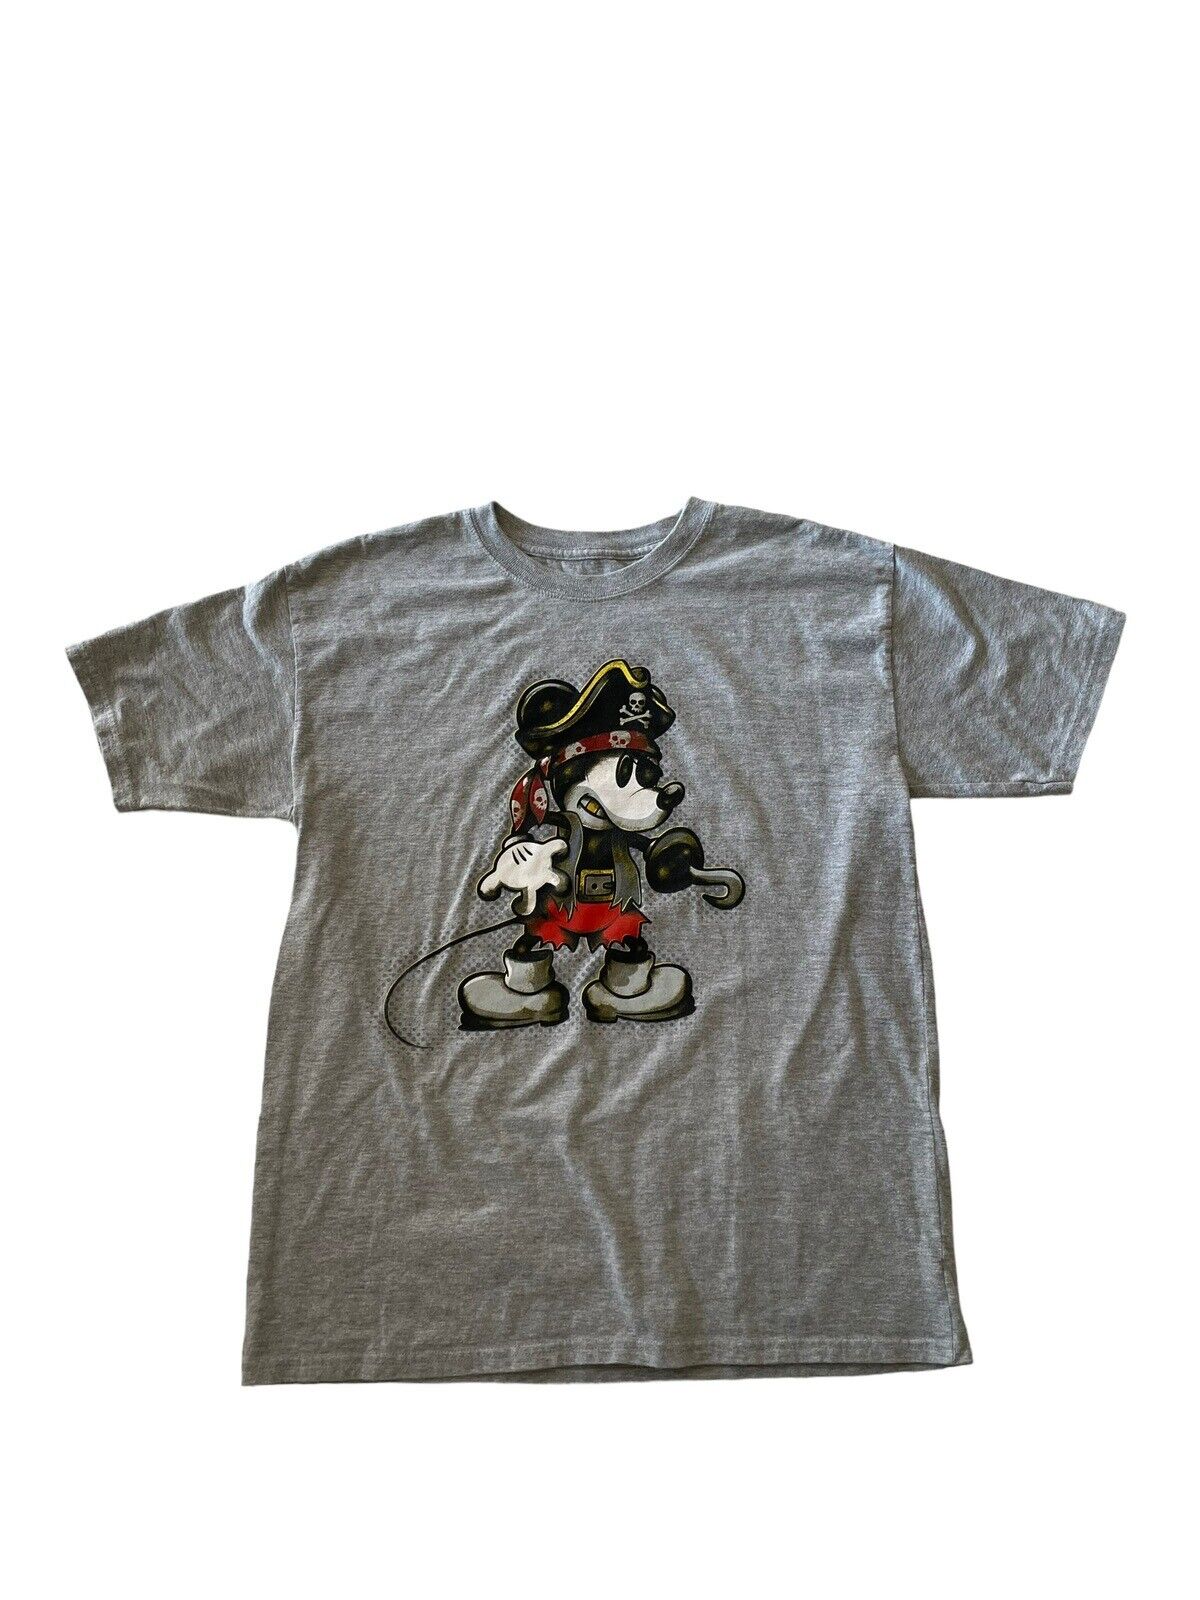 Disneyland Walt Disney World Mickey Mouse Pirate Gray T Shirt Youth SZ 15-17 GUC